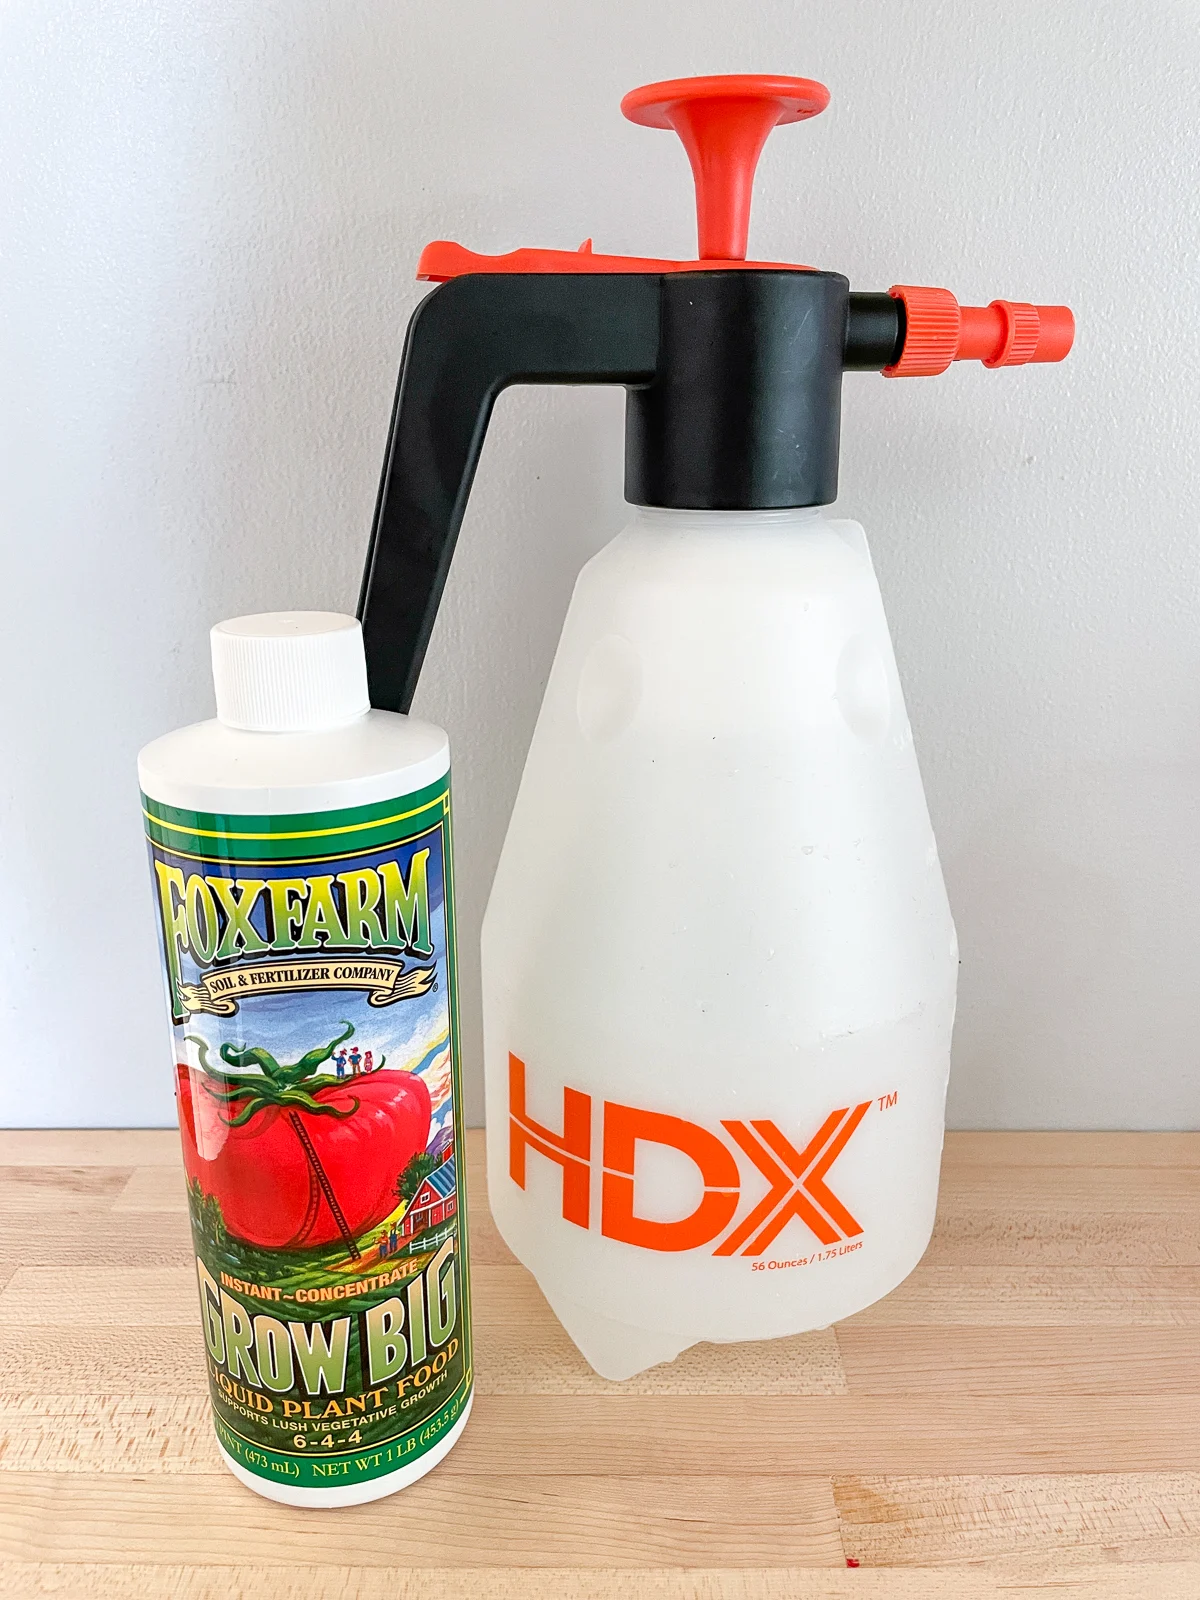 Fox Farm water soluble fertilizer and spray bottle